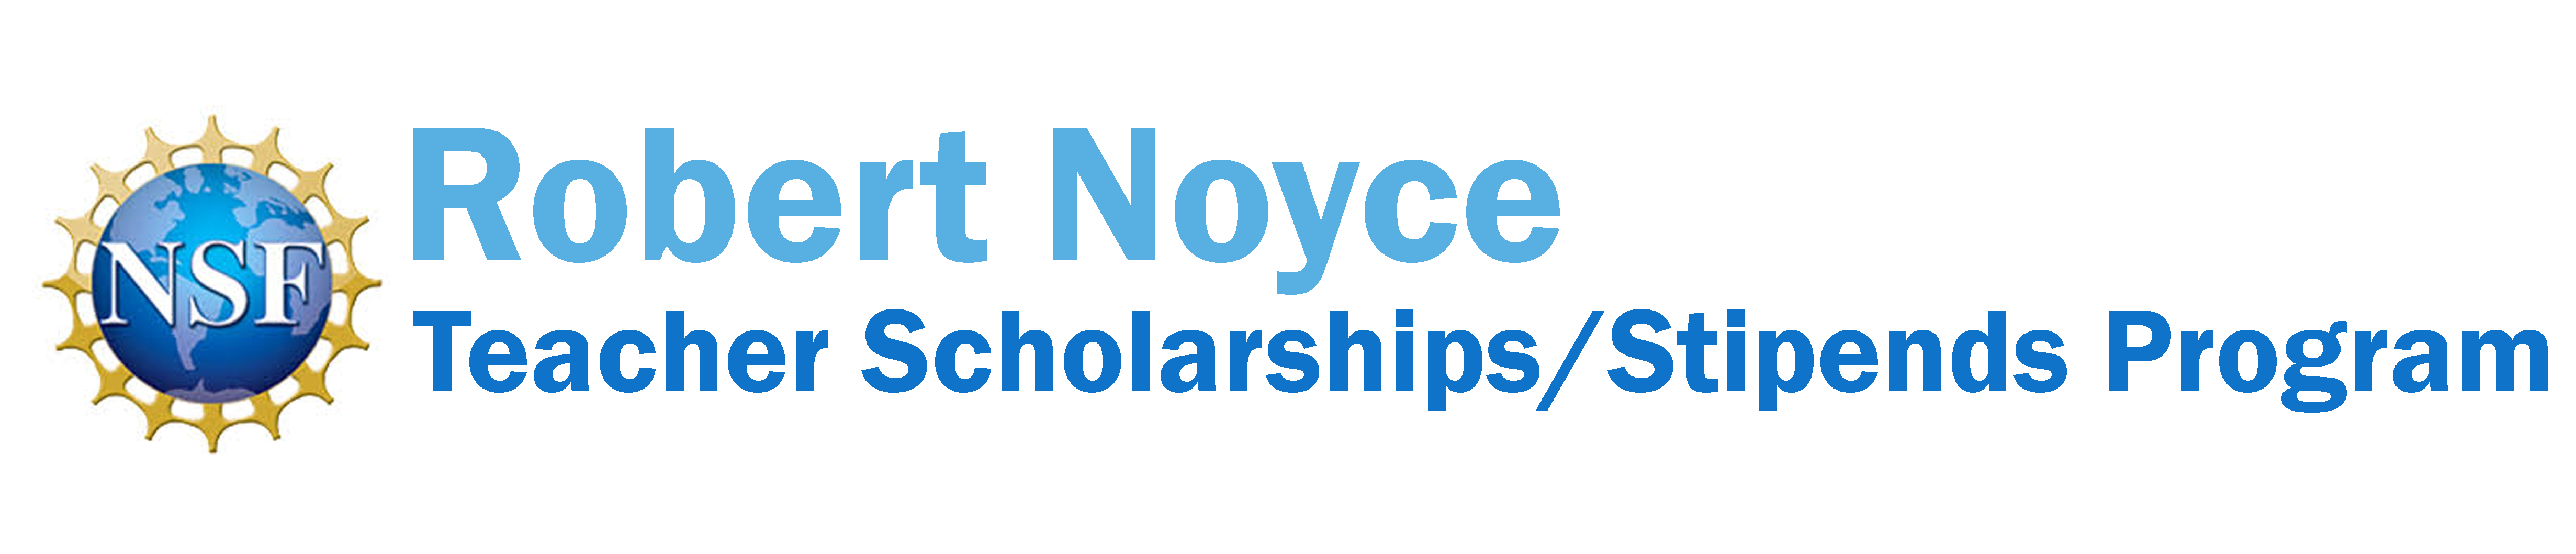 Robert Noyce Teacher Scholarship